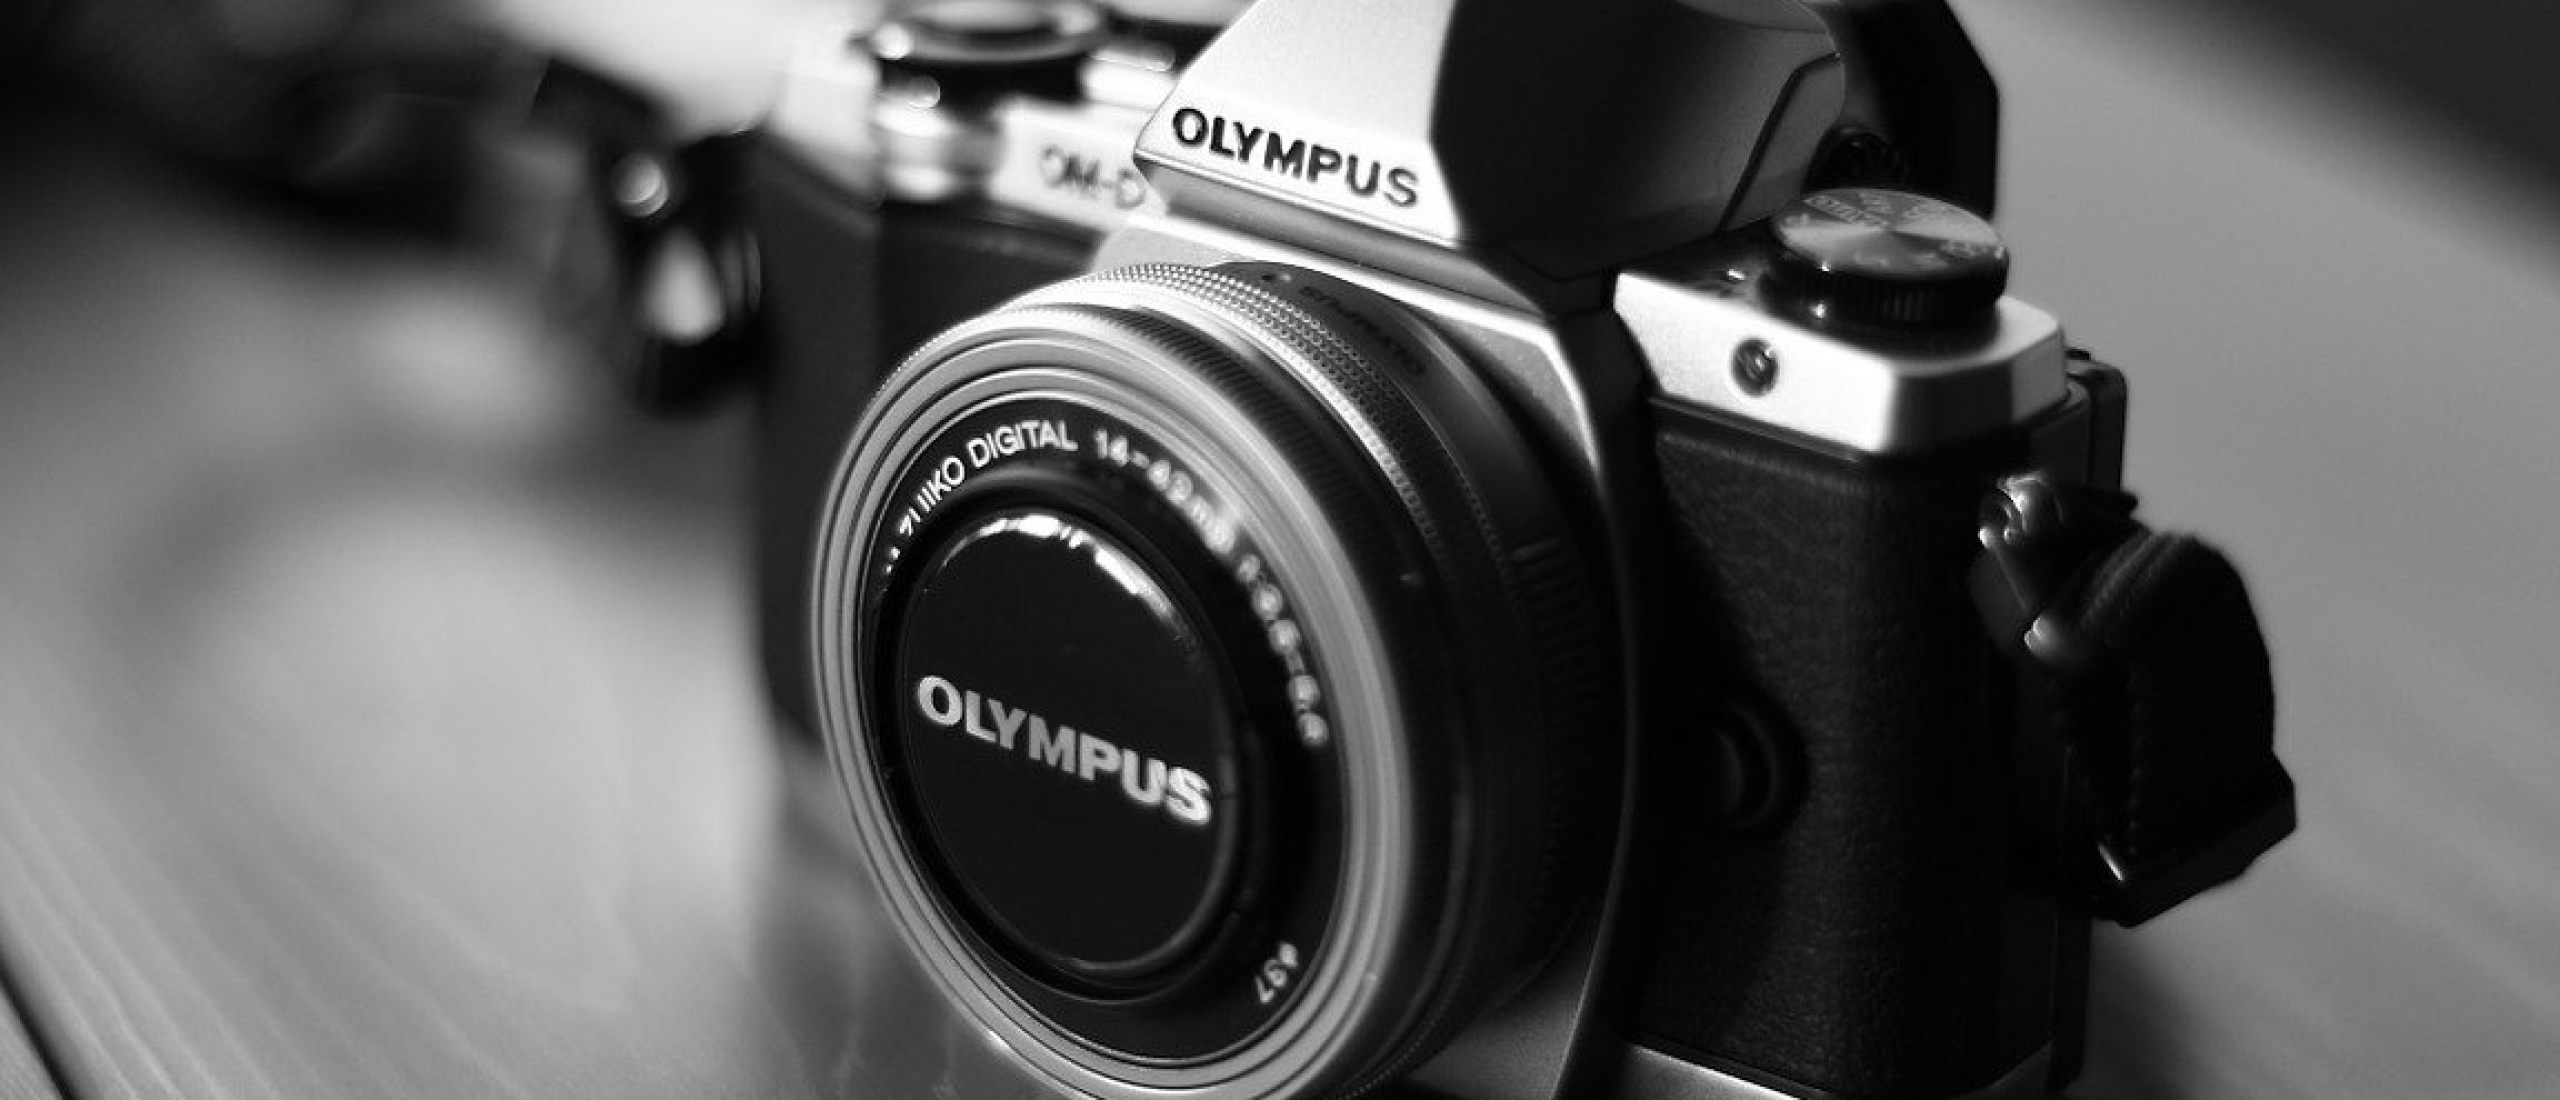 Olympus OM-D E-M10 Mark IV Review